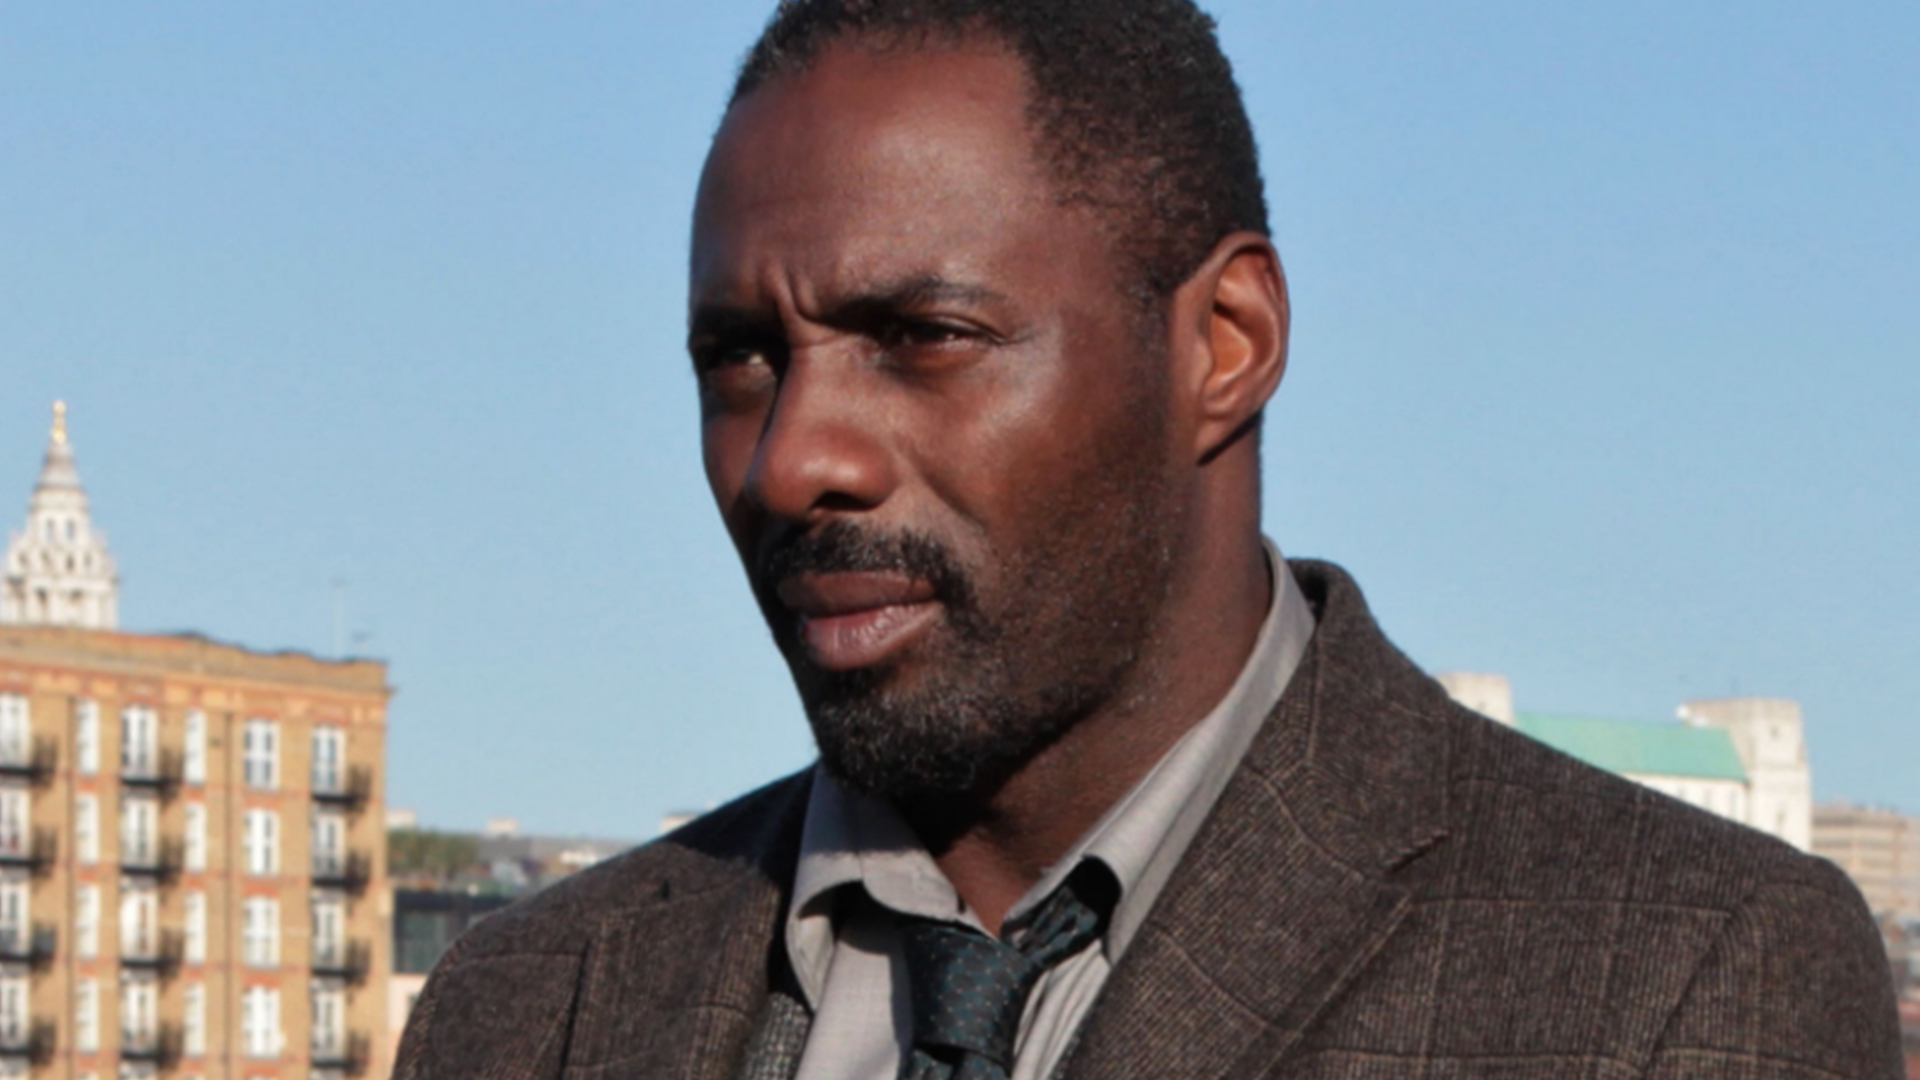 Idris Elba, Luther hardman, reveals a huge career change following James Bond snub